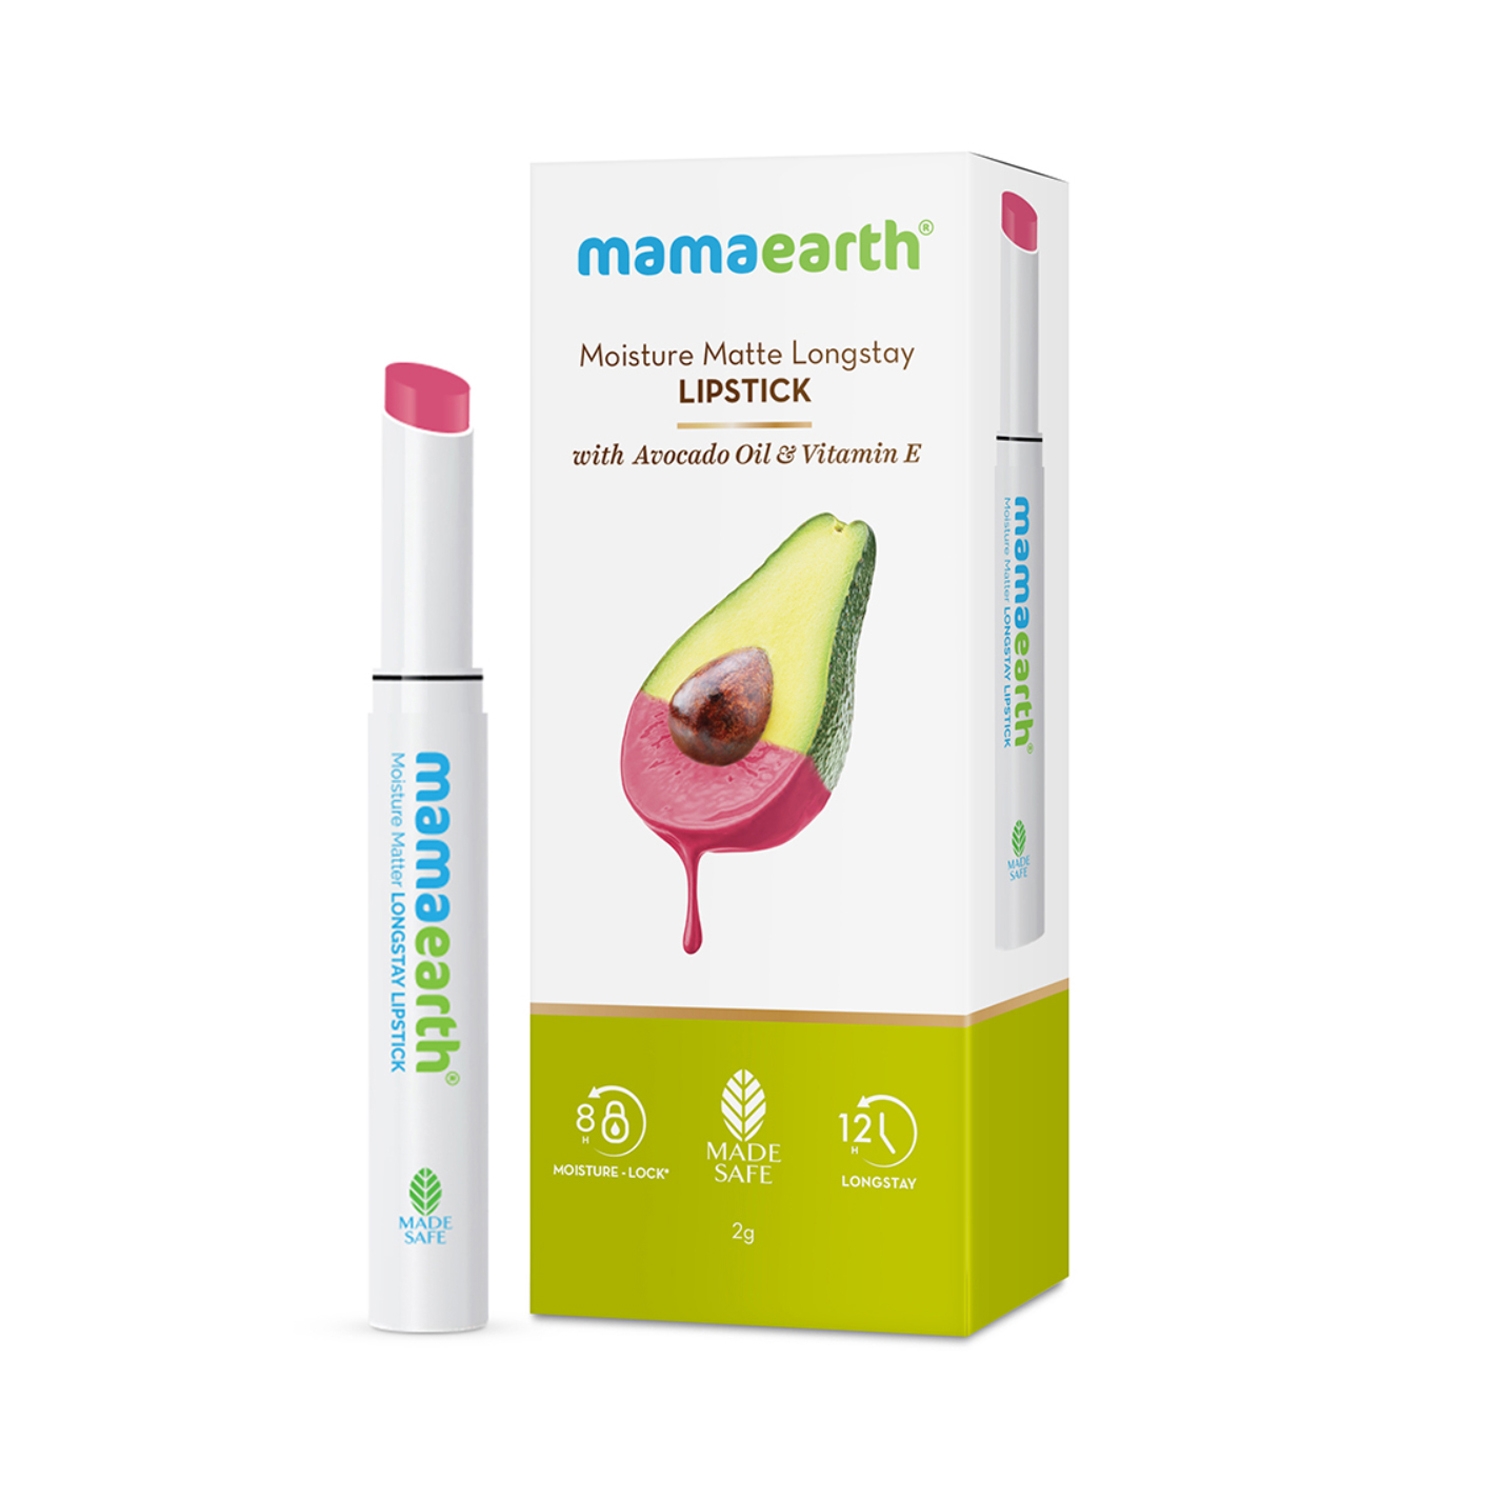 Mamaearth | Mamaearth Moisture Matte Longstay Lipstick With Avocado Oil & Vitamin E - 03 Candyfloss Pink (2g)